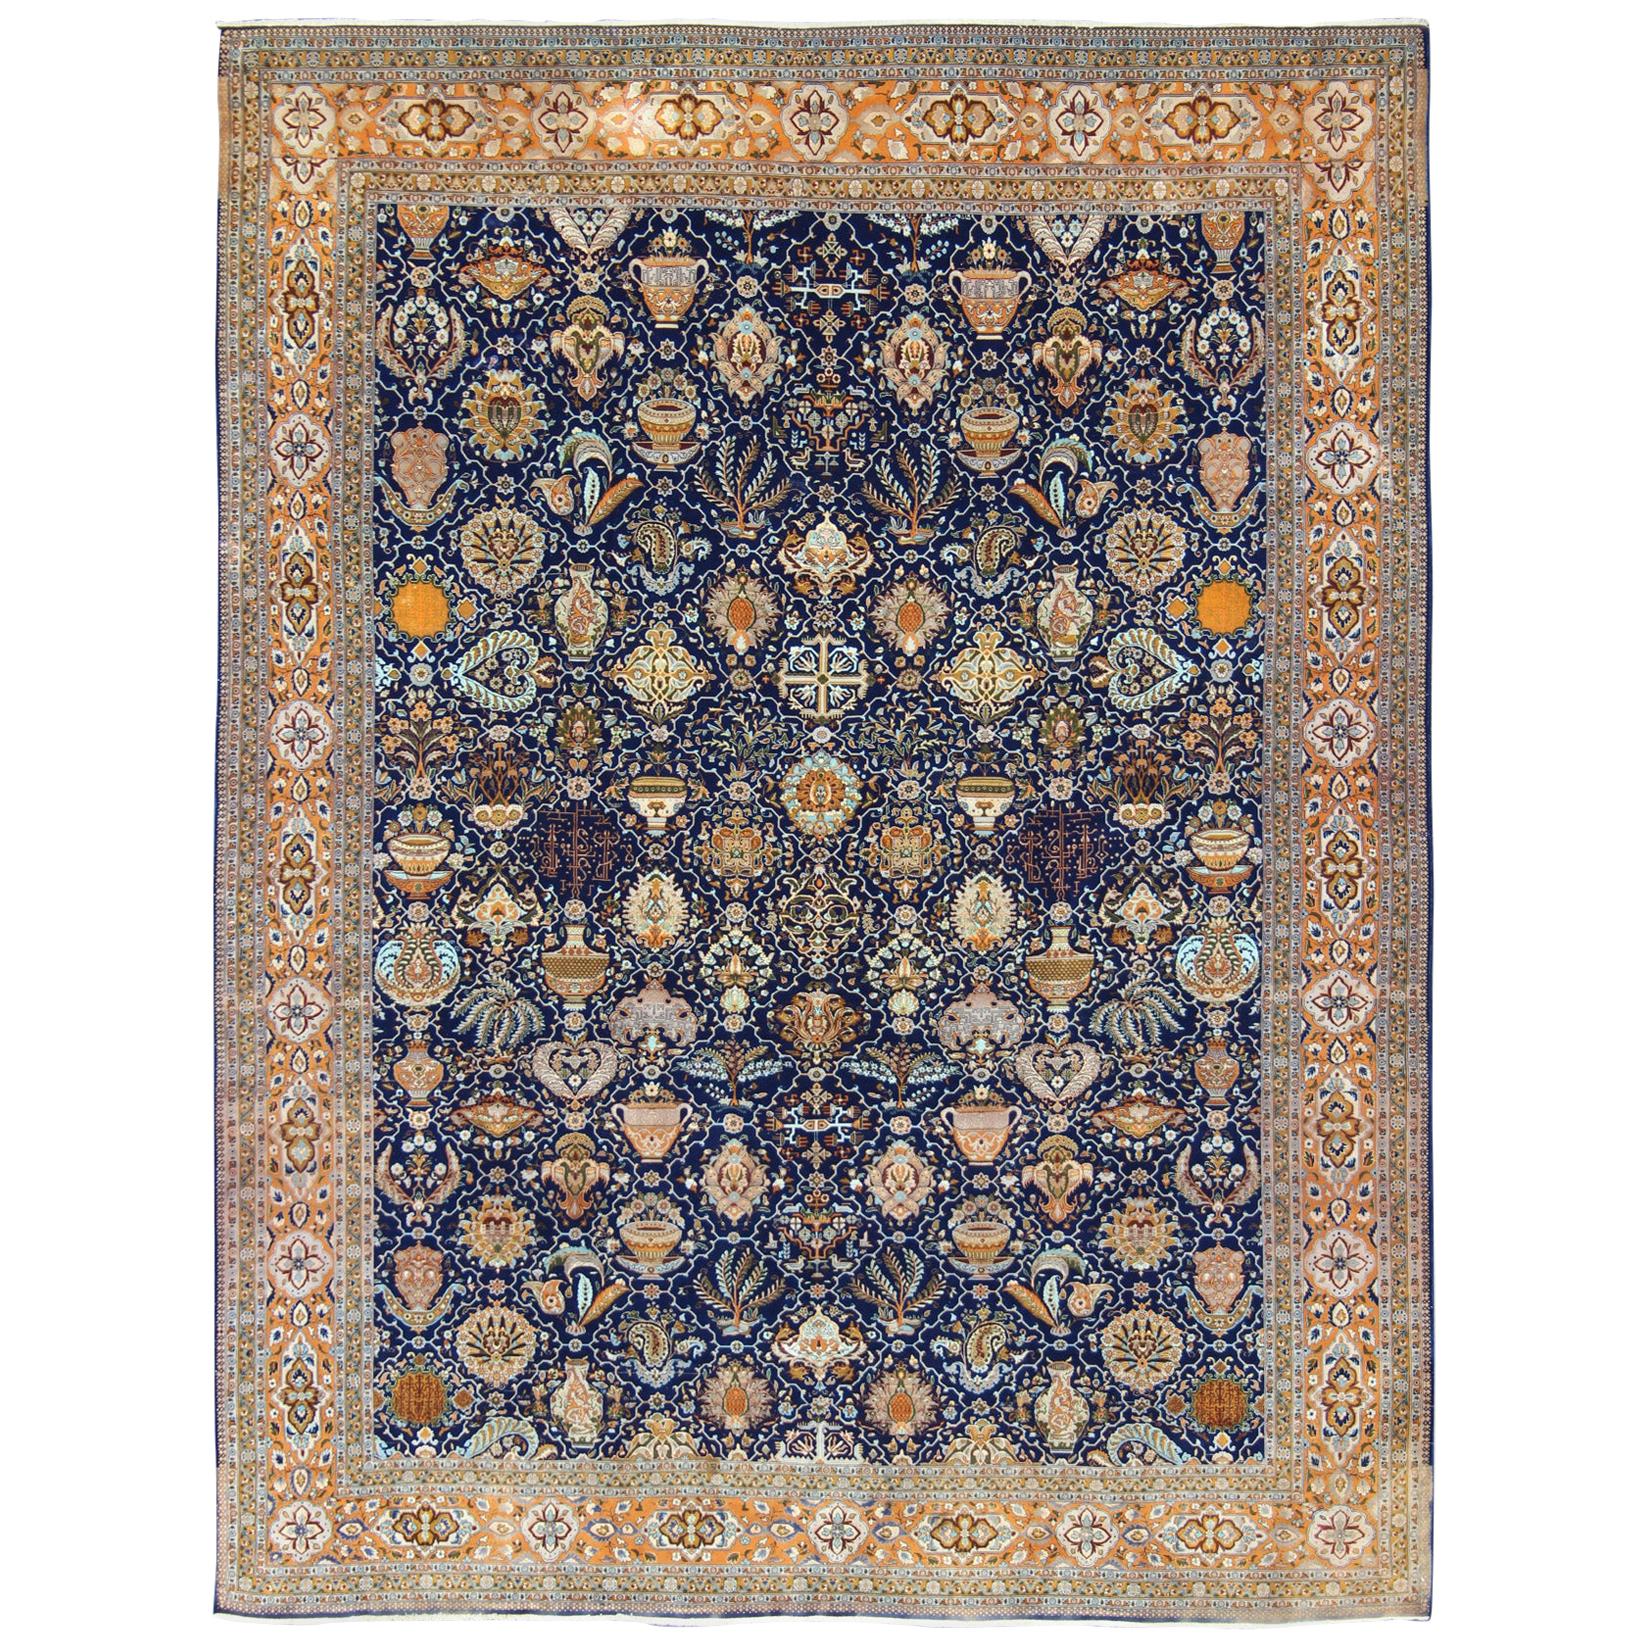 Fine Weave Persian Antique Tabriz Carpet with Intricate Design in Blue Color For Sale